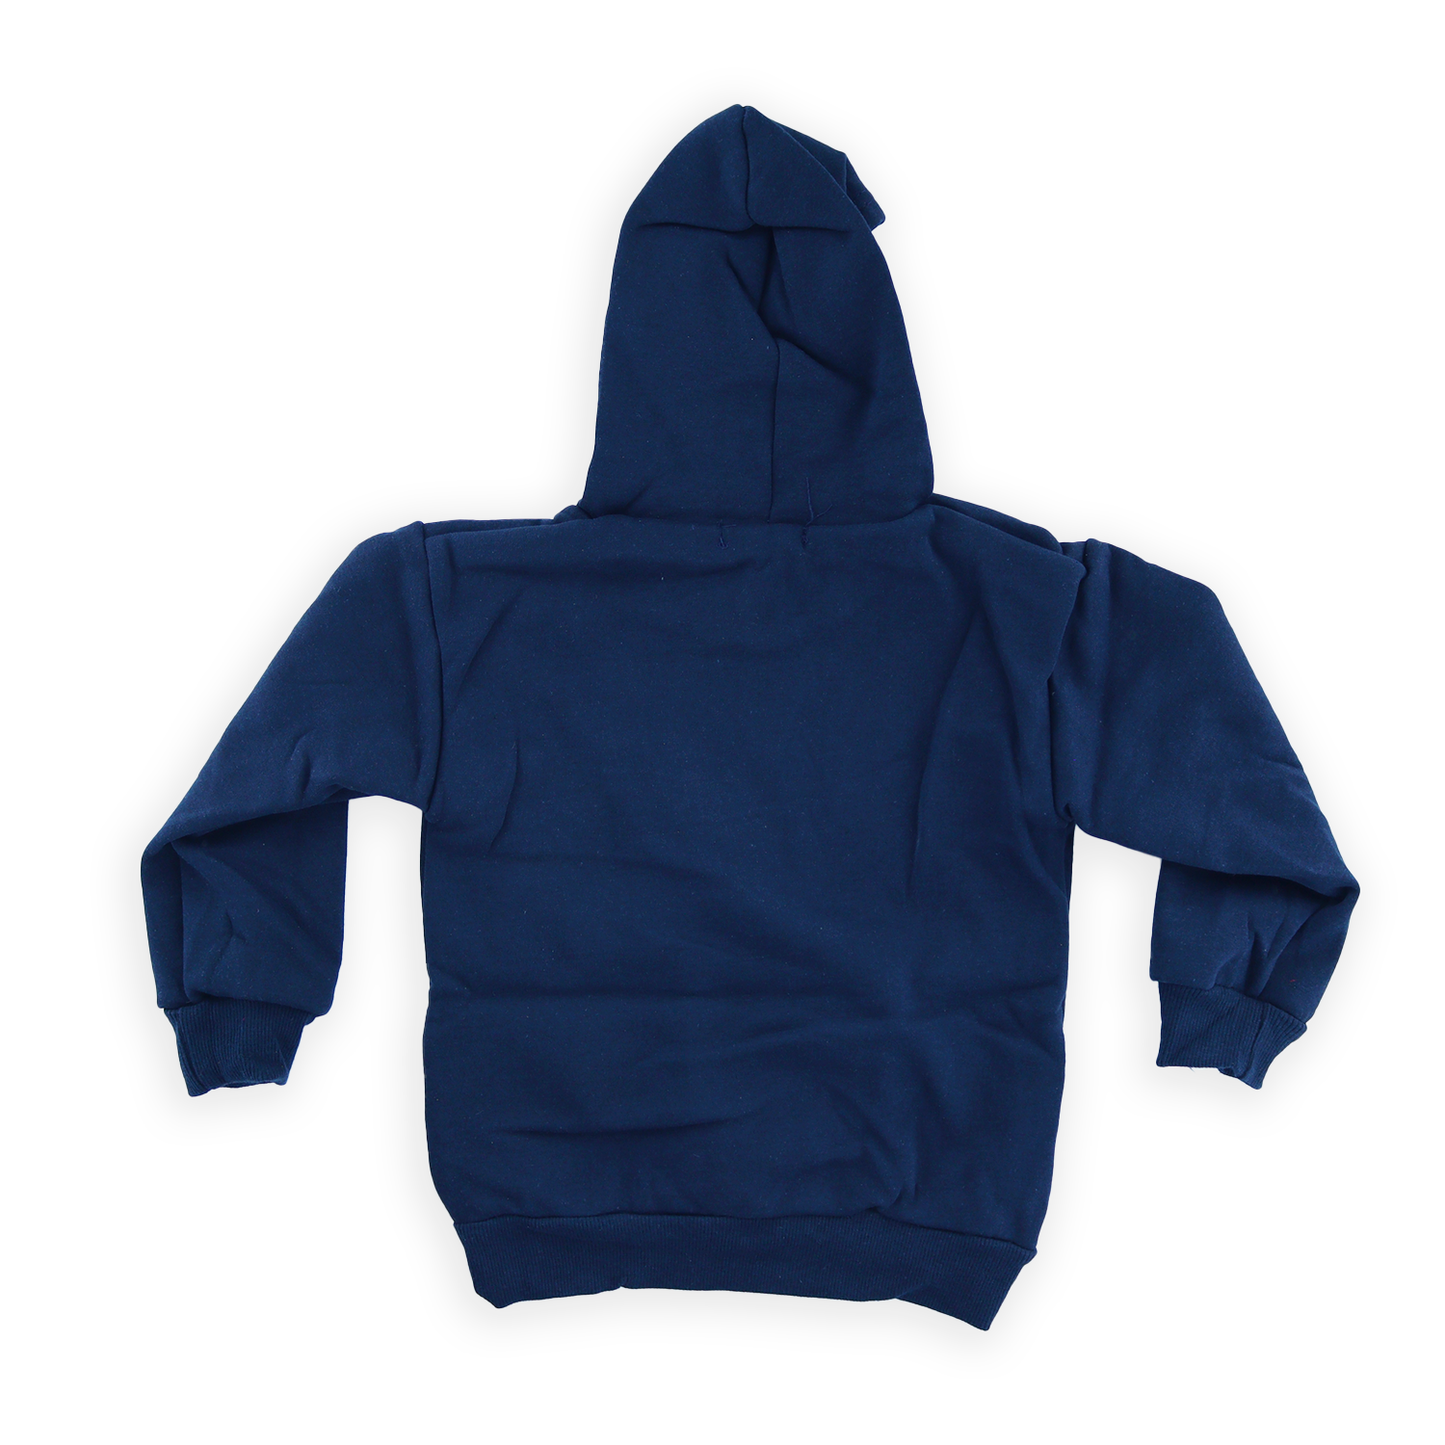 Mimmy Kids Full Sleeve Printed Baby Boys & Baby Girls Sweatshirt